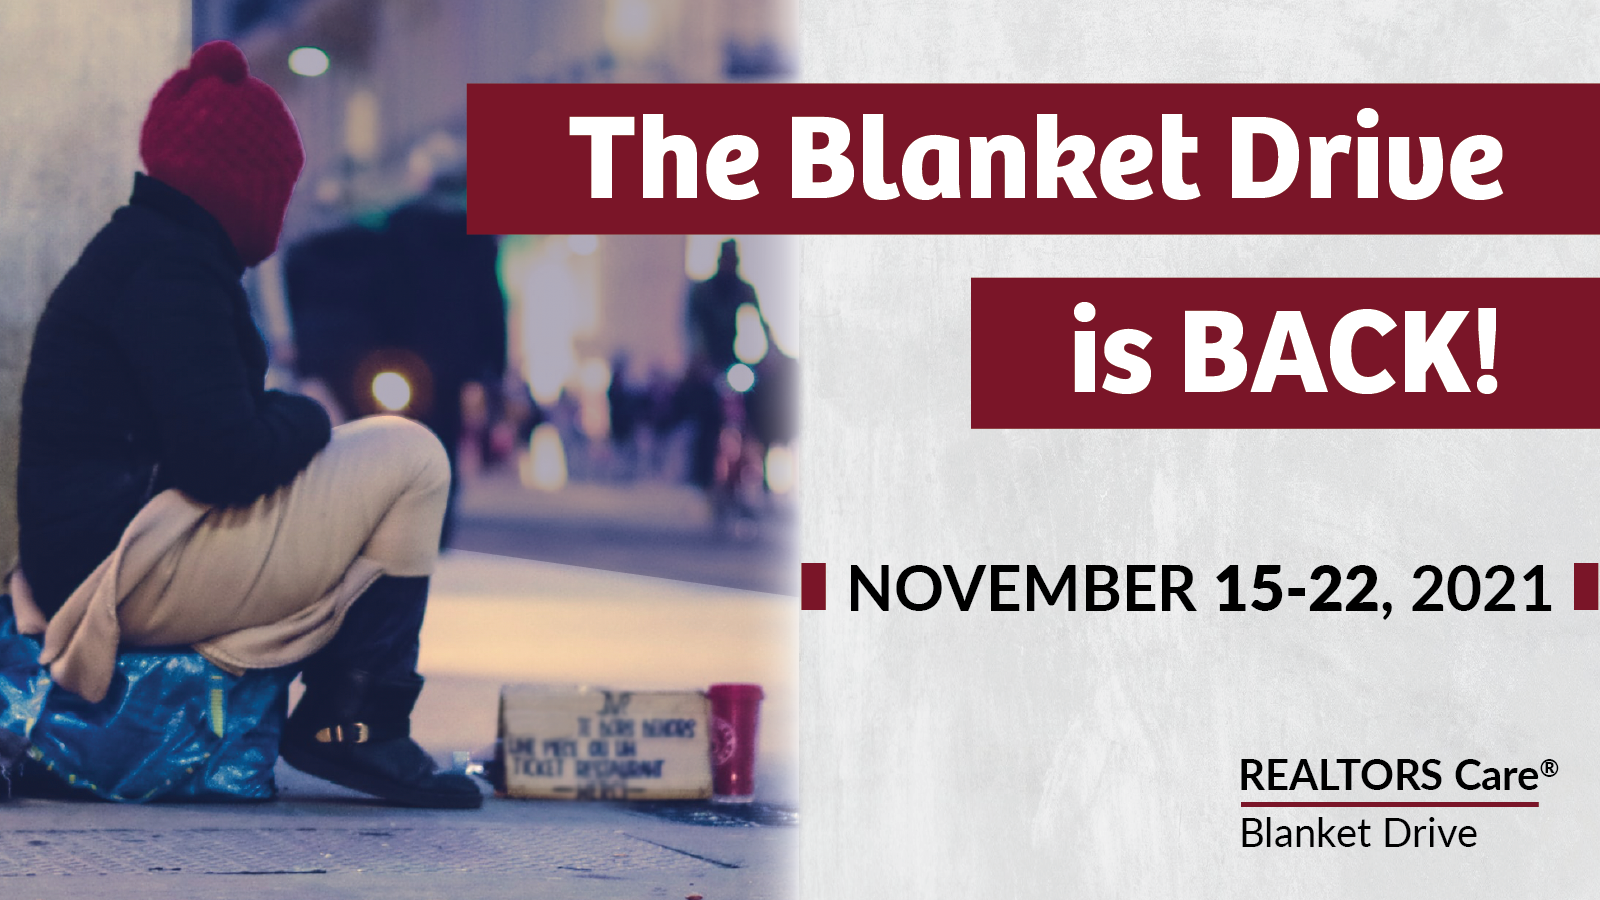 The 27th annual REALTORS Care® Blanket Drive begins November 15